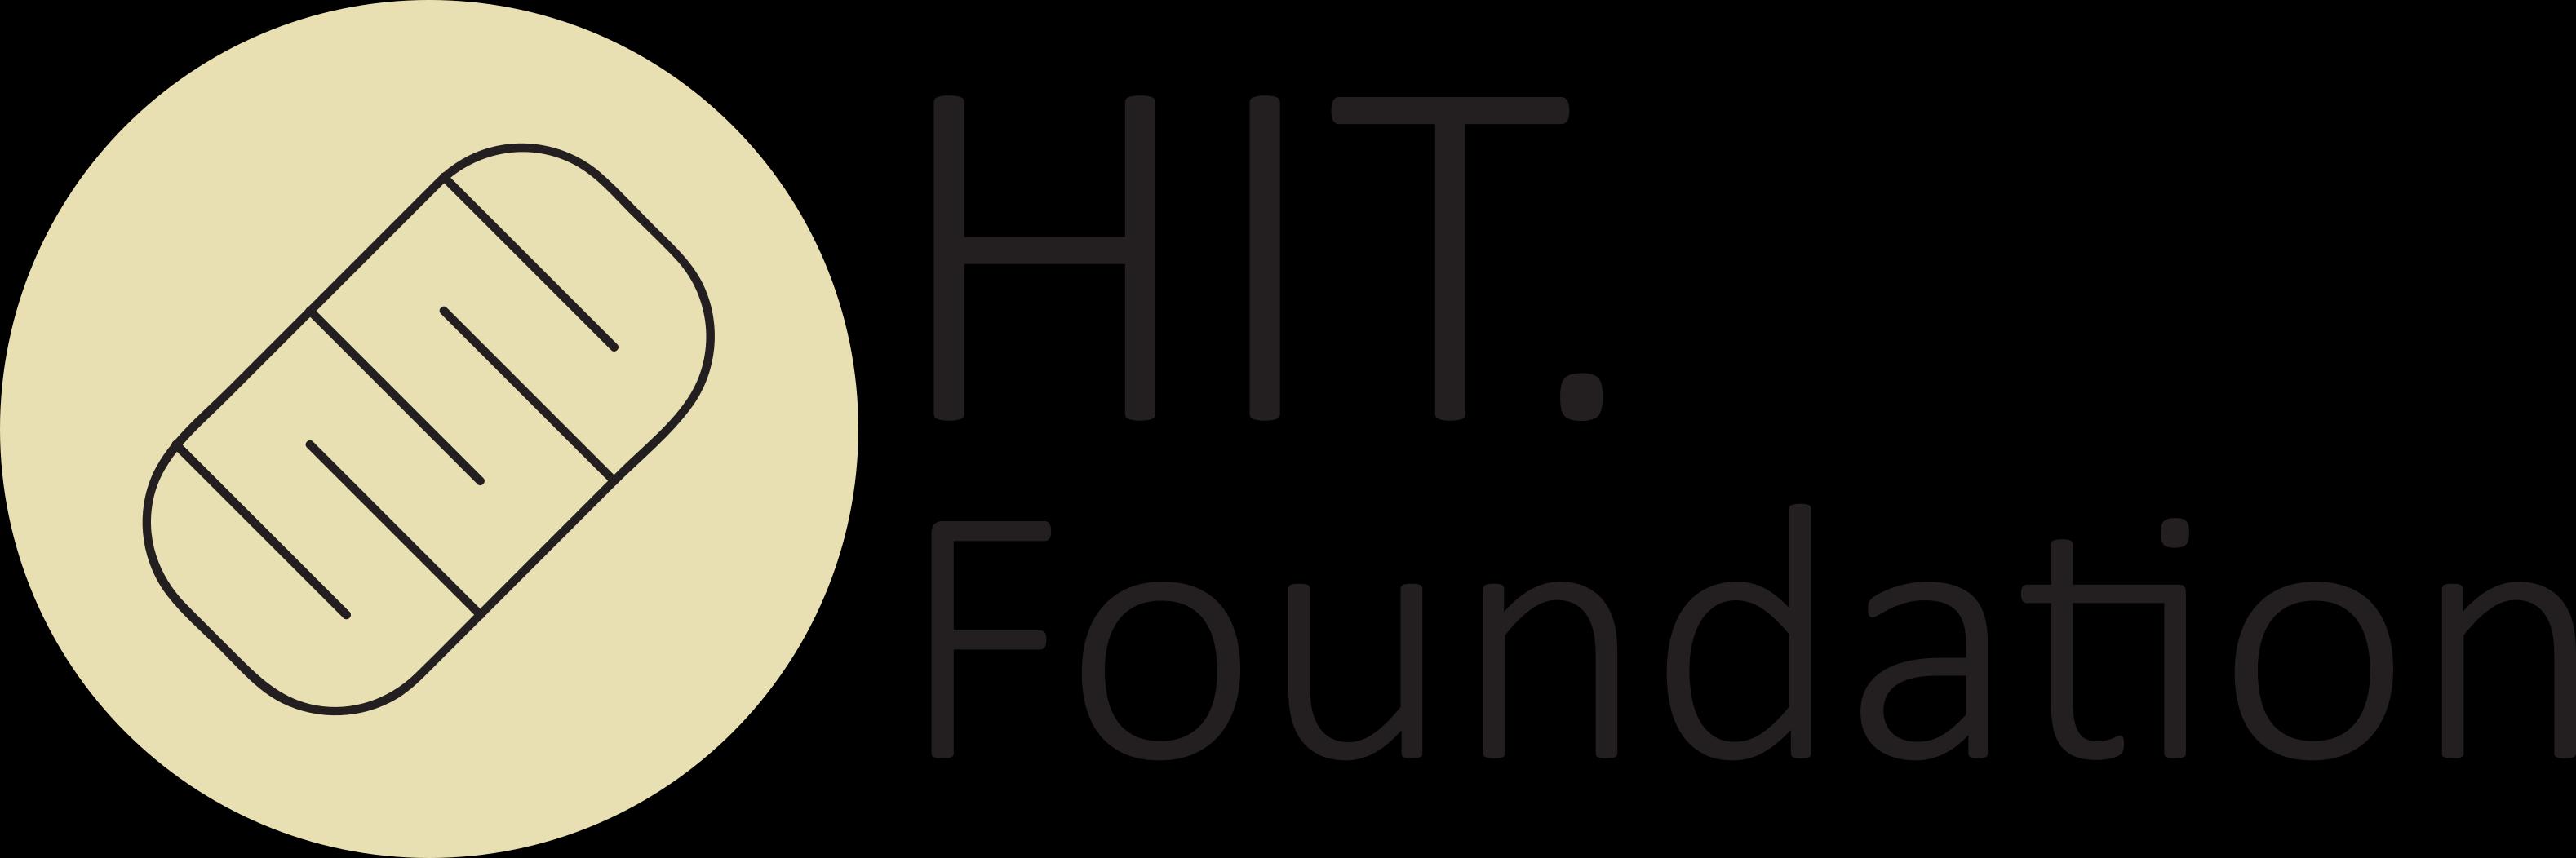 HIT Foundation_logo